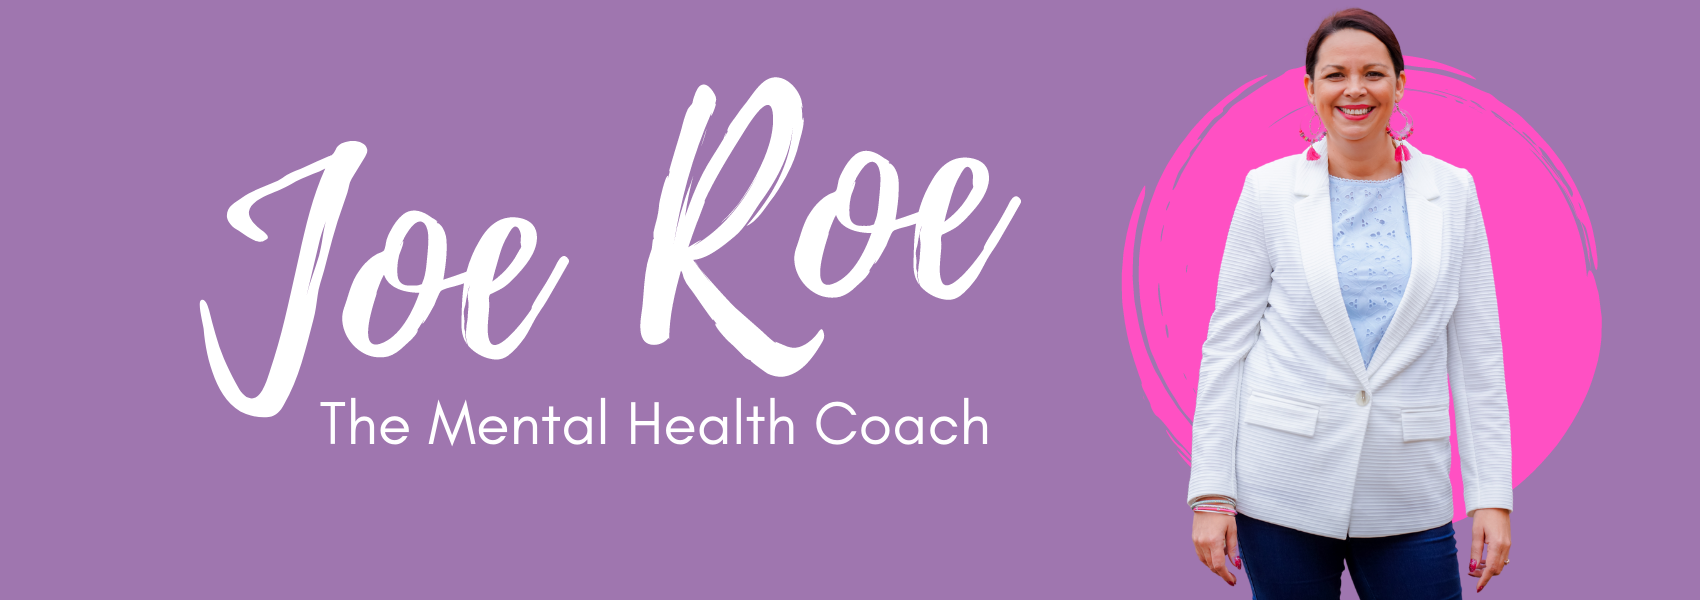 Header Image. Joe Roe, the Mental Health Coach. Joe smiles against a purple background.